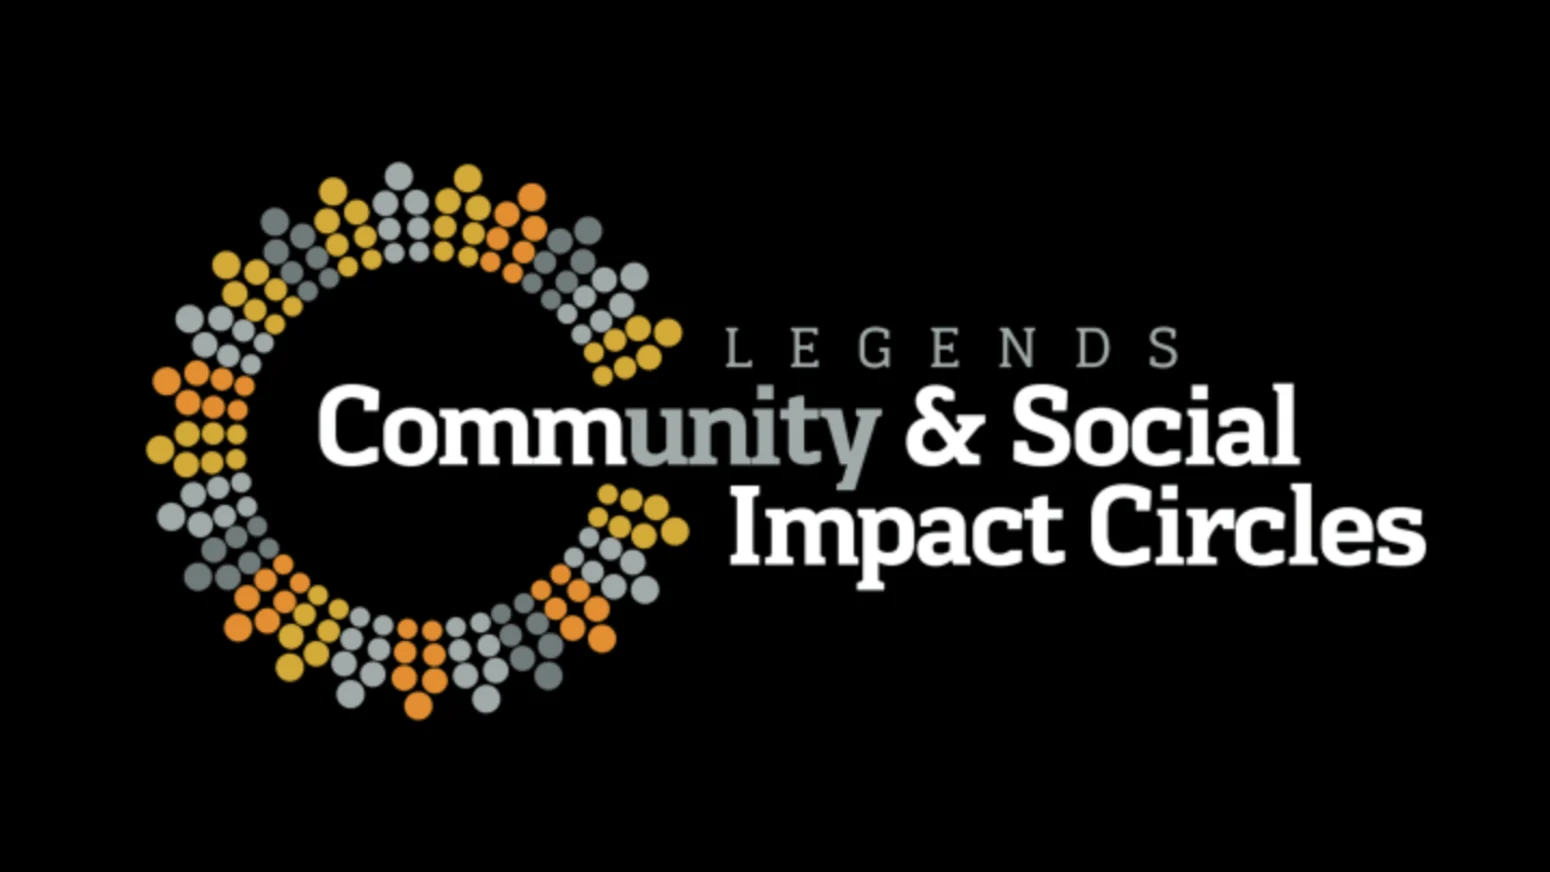 Legends Introduces Community & Social Impact Circles